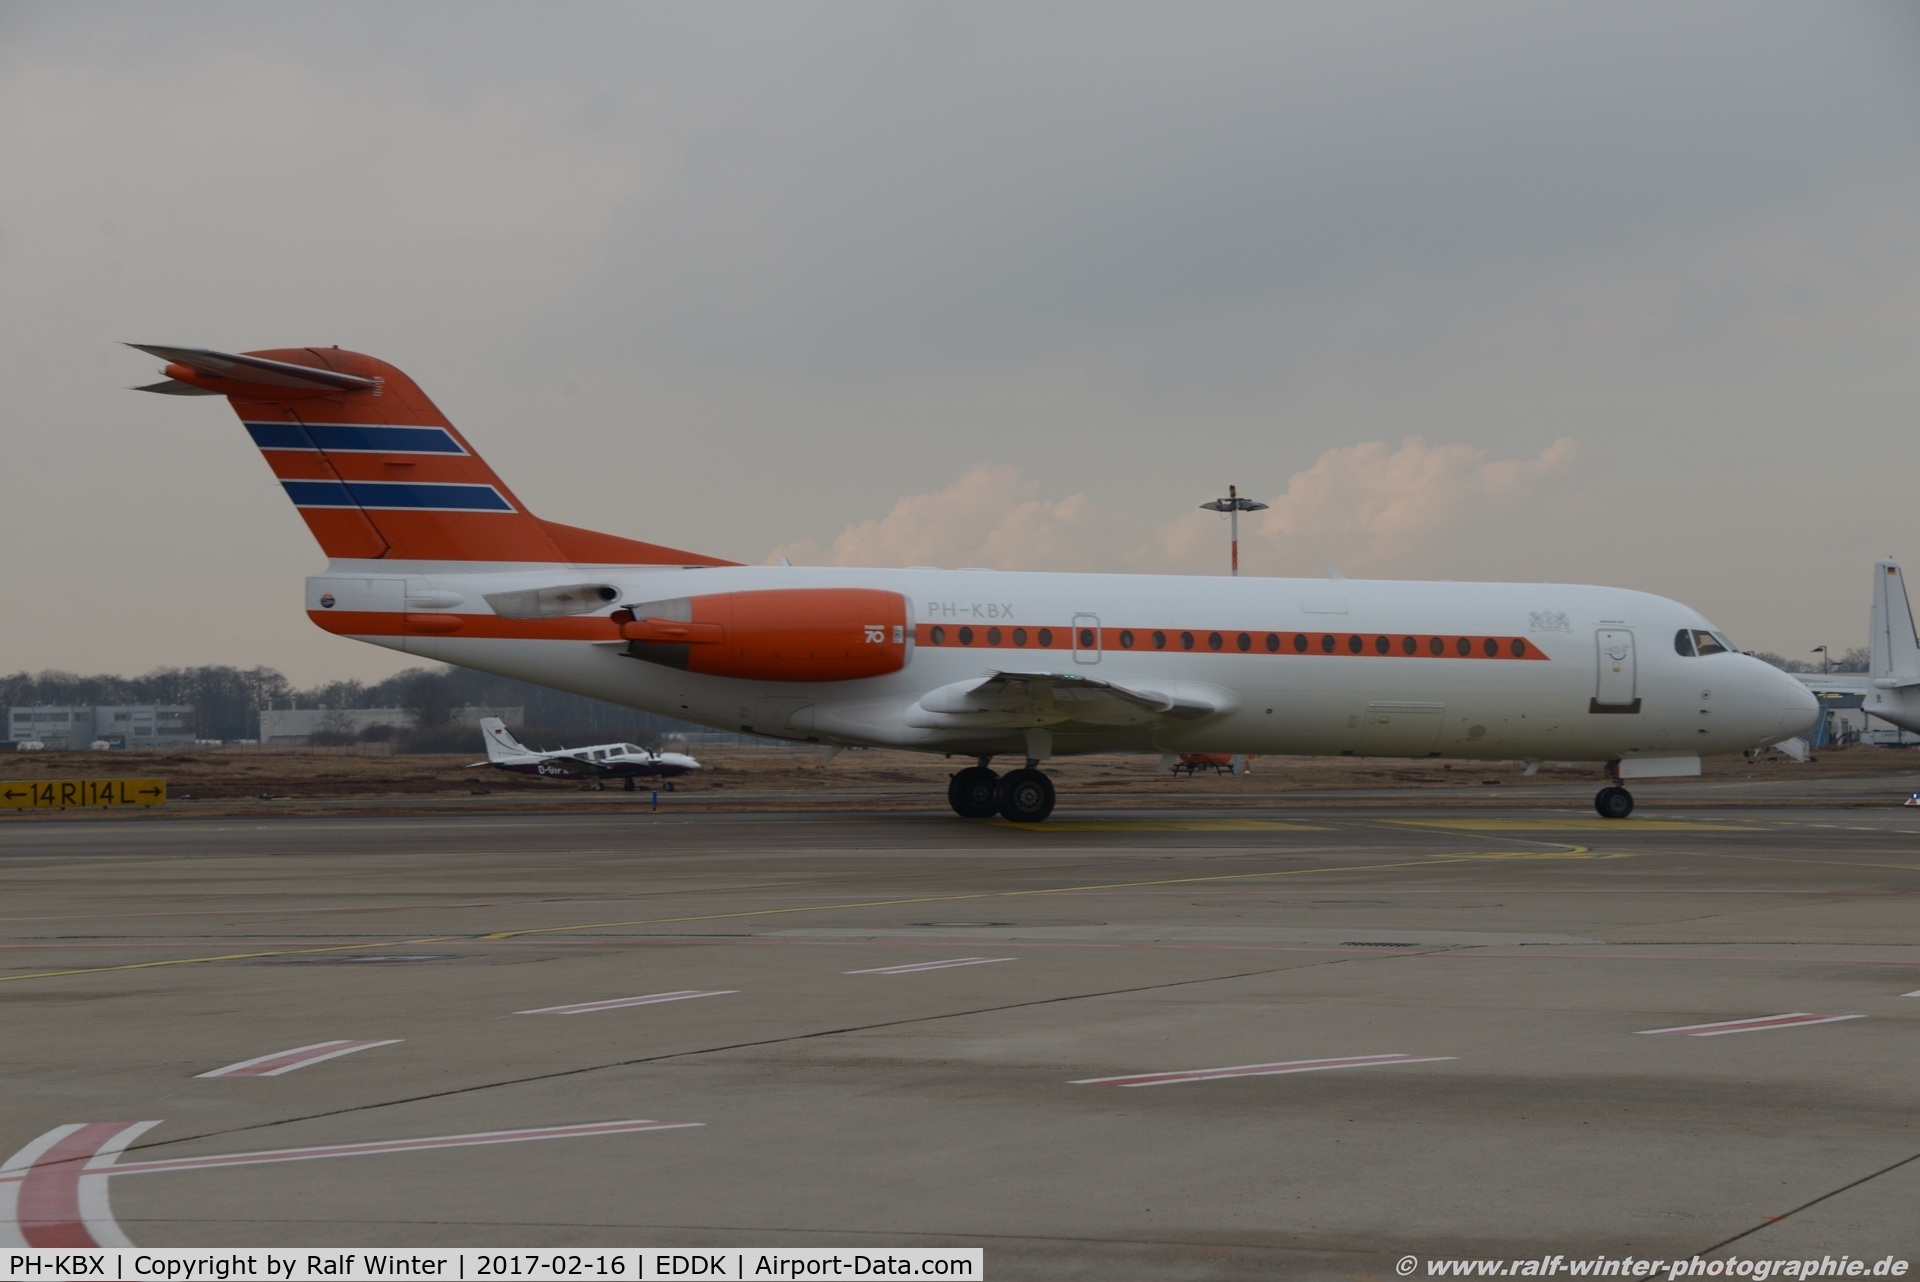 PH-KBX, 1996 Fokker 70 (F-28-0070) C/N 11547, Fokker 70 F28-0070 - Netherlands Government Royal Family - 11547 - PH-KBX - 16.02.2017 - CGN